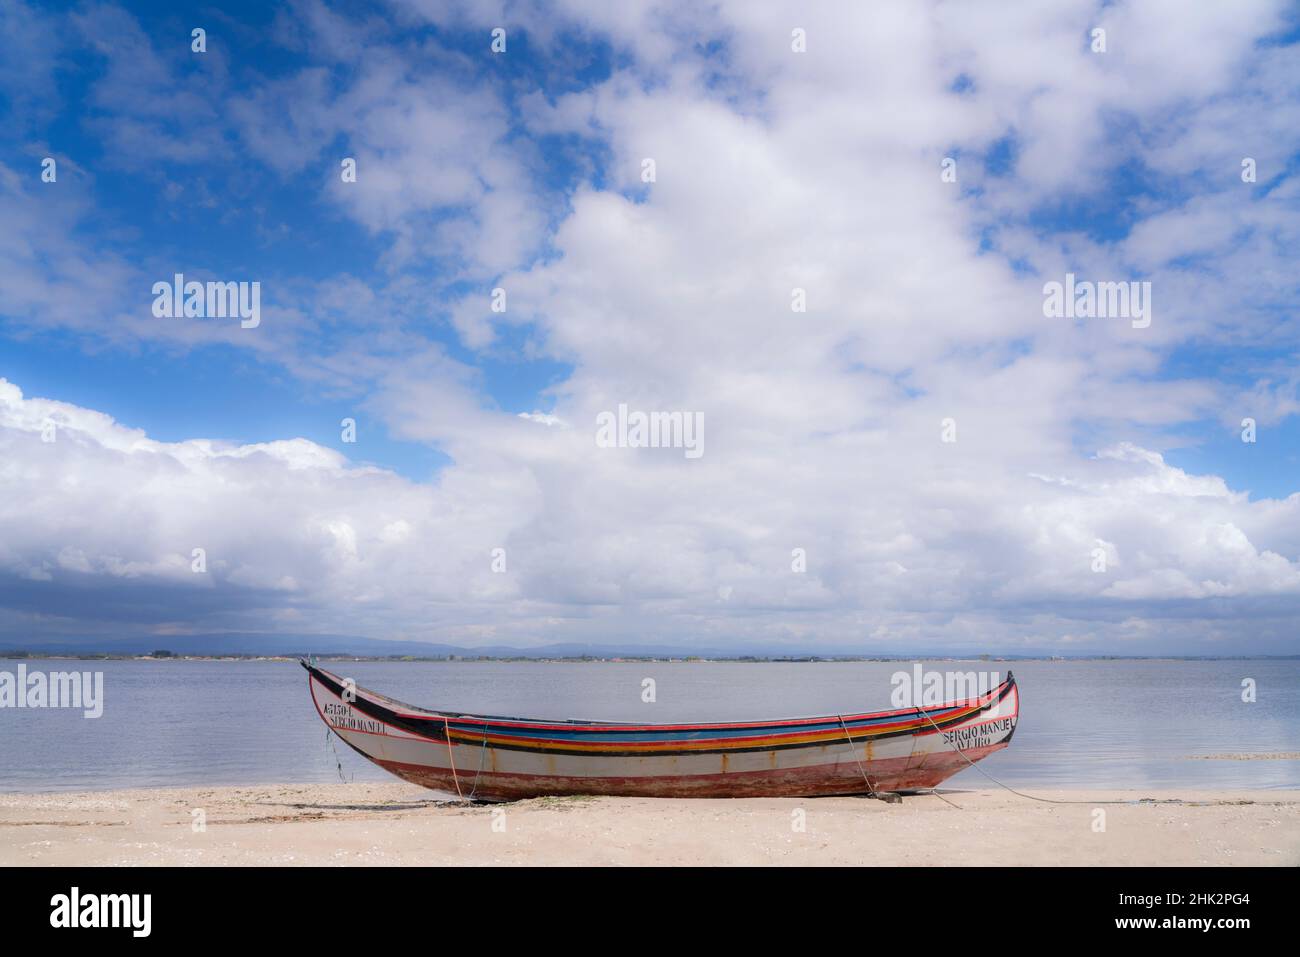 Europa, Portugal, Torreira. Tradicional barco de pesca en la playa. Foto de stock